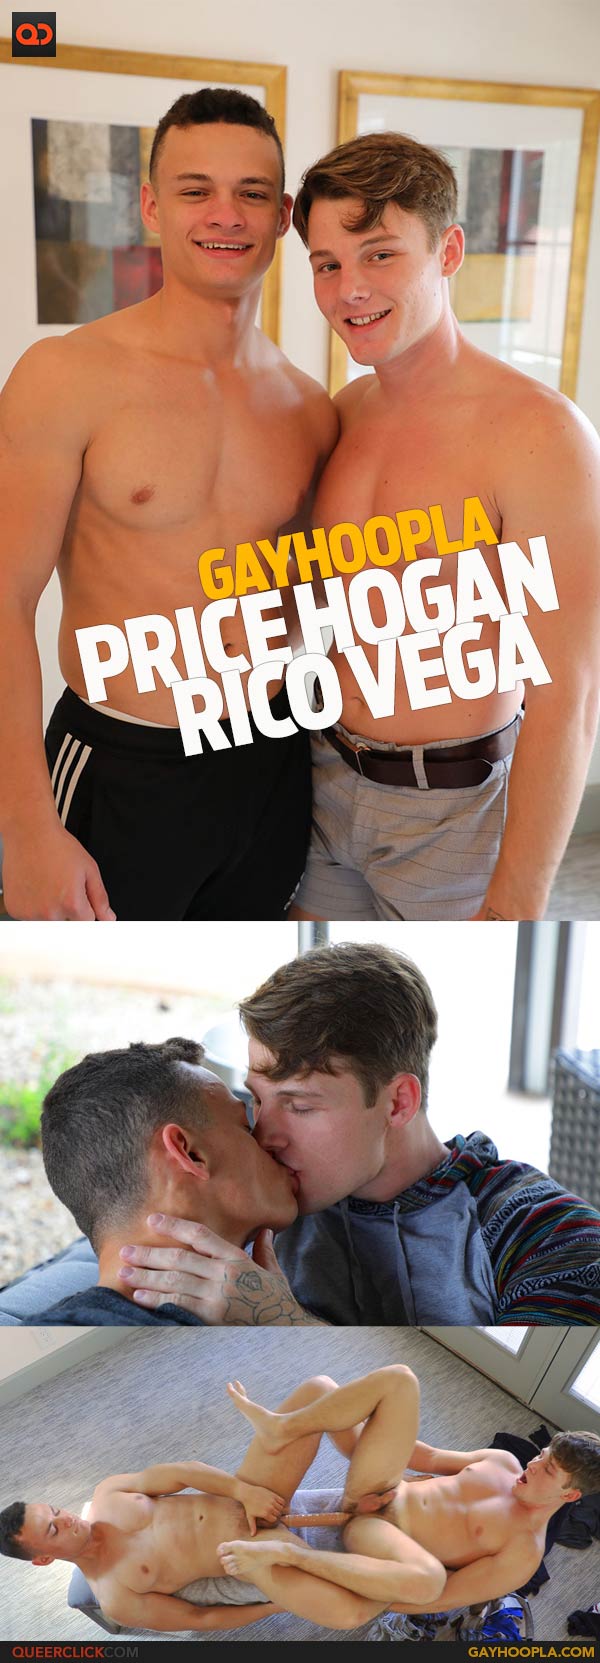 GayHoopla: Price Hogan and Rico Vega Flip Fuck